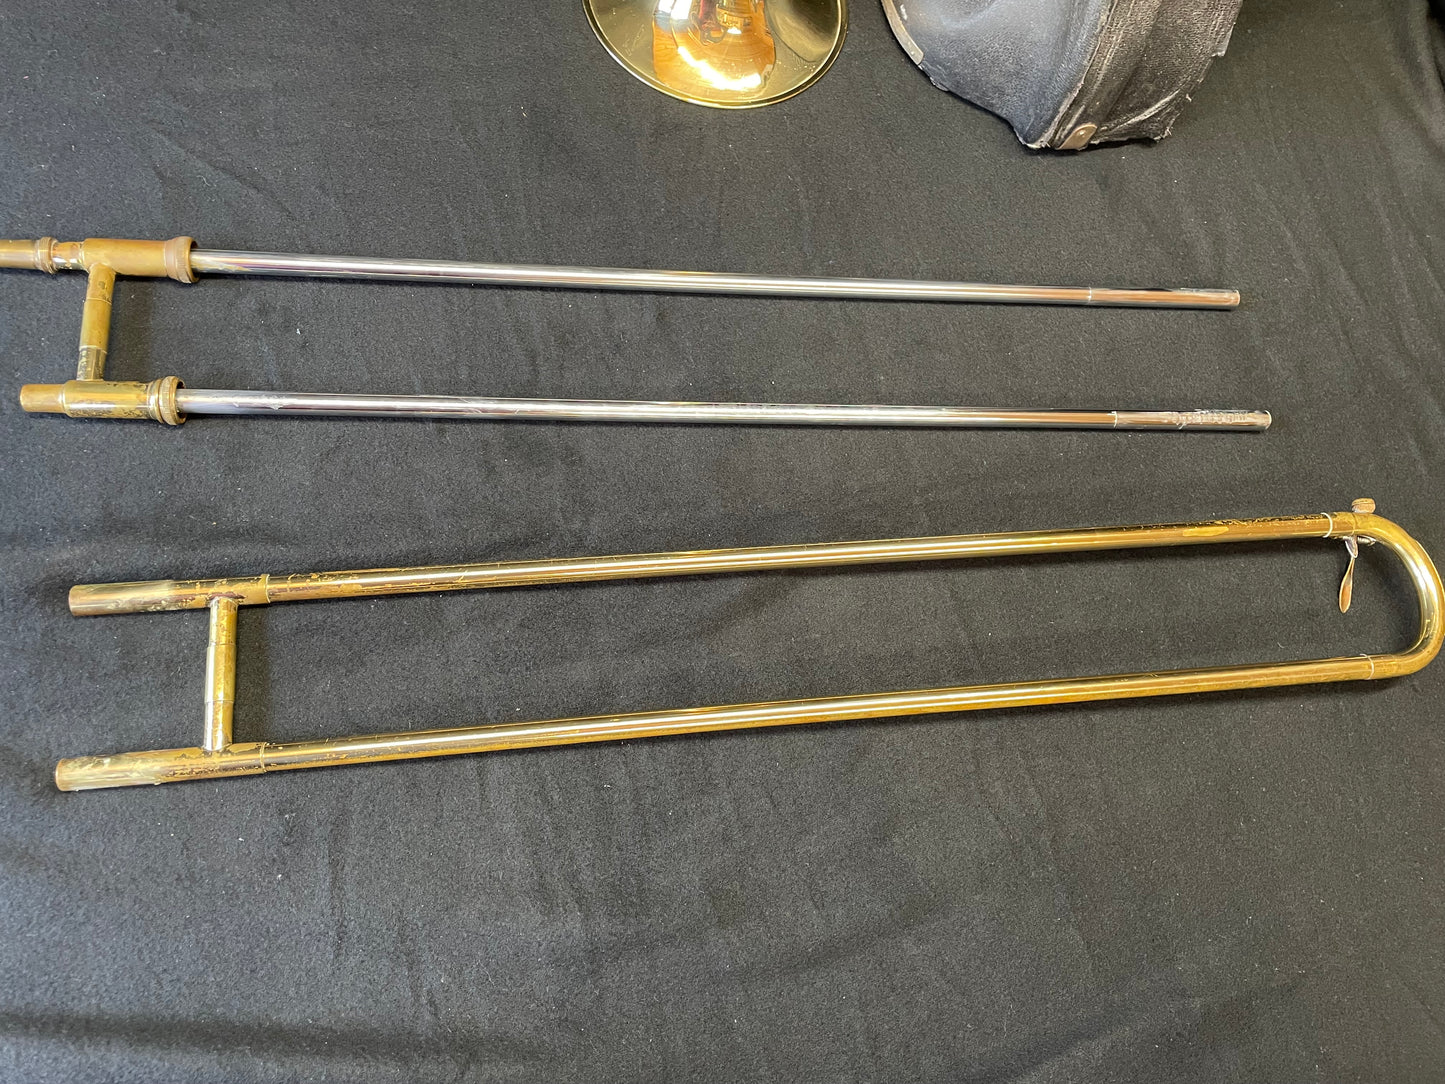 Corton Tenor Trombone - Student/Heritage/Collectors Instrument